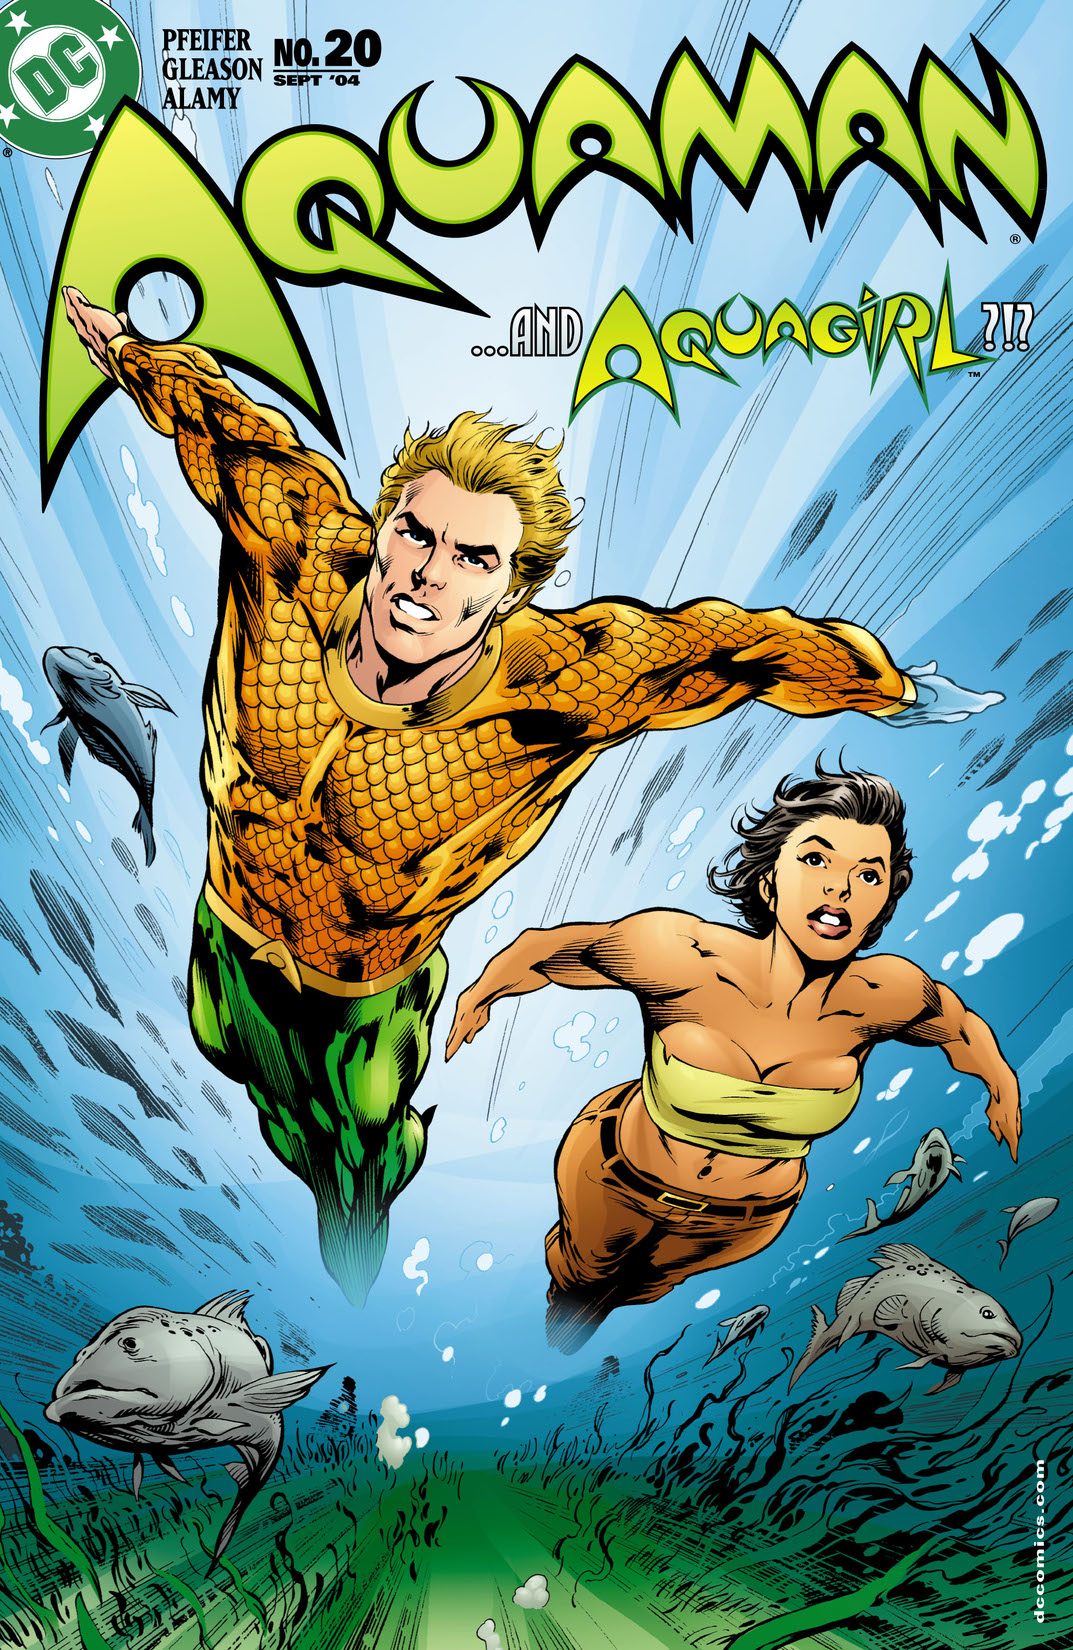 Aquaman (2002-) #20 preview images